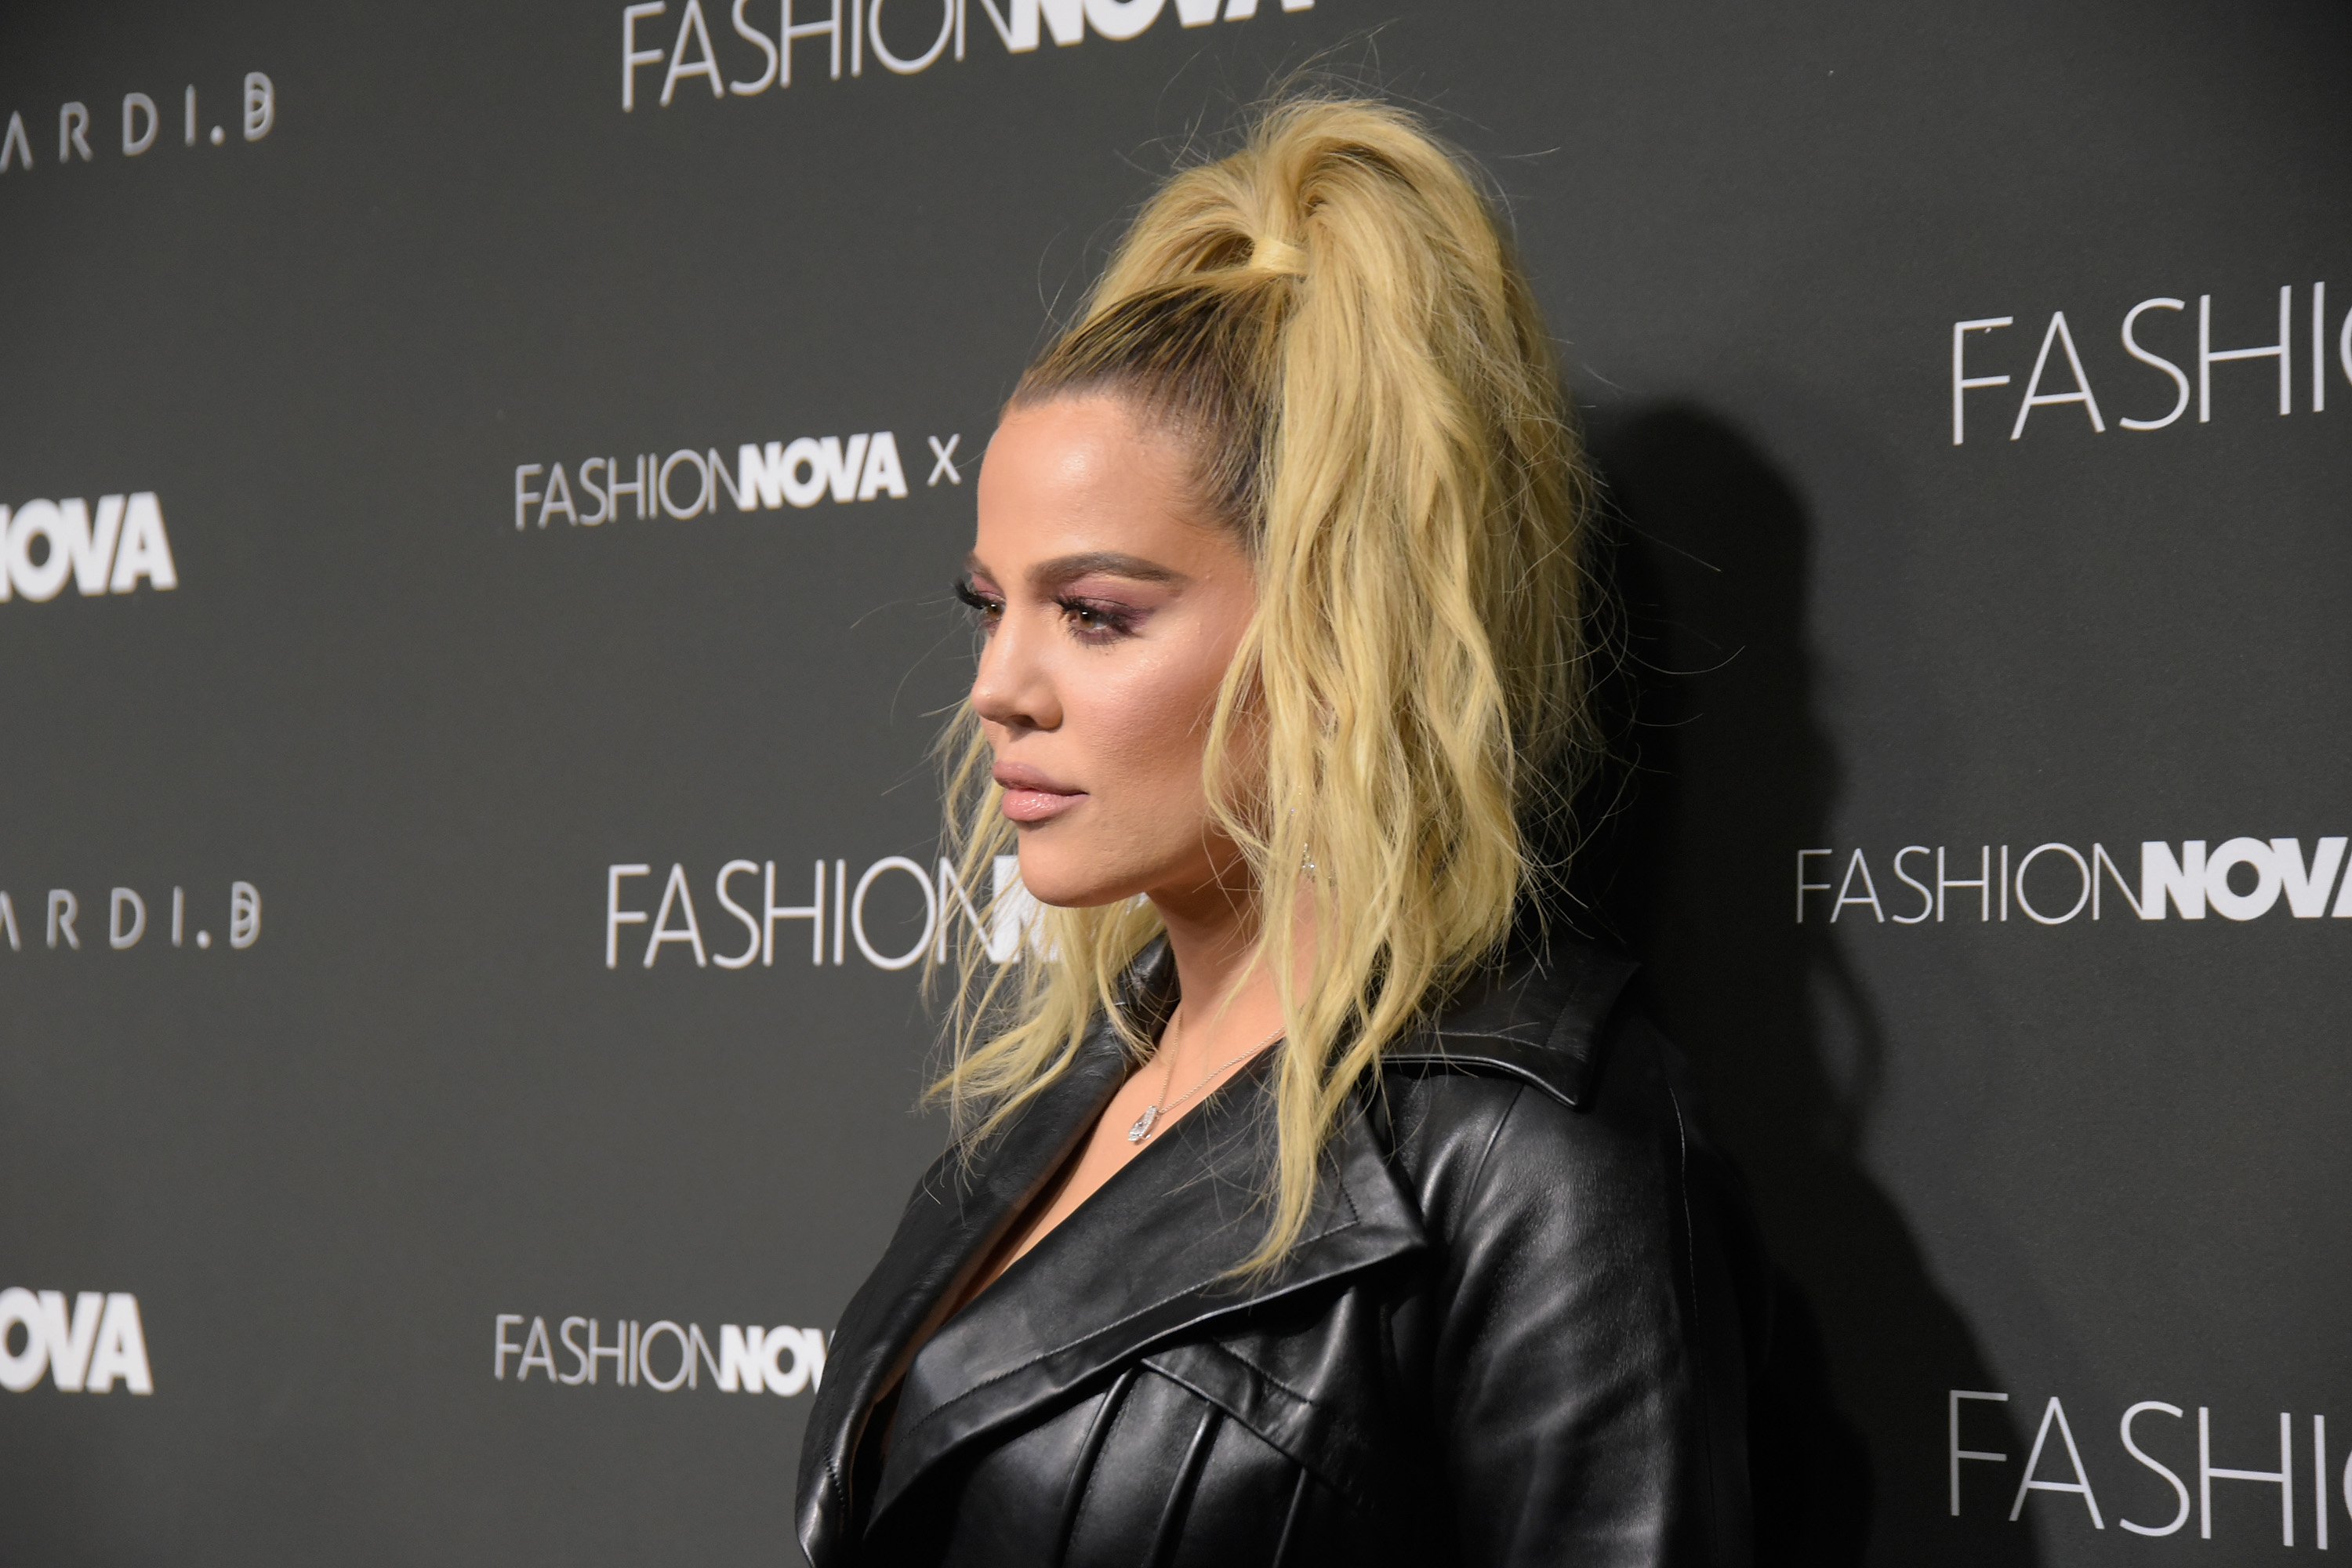 Khloe Kardashian attends the Fashion Nova x Cardi B collaboration launch event at Boulevard3 in 2018 in Hollywood, California.